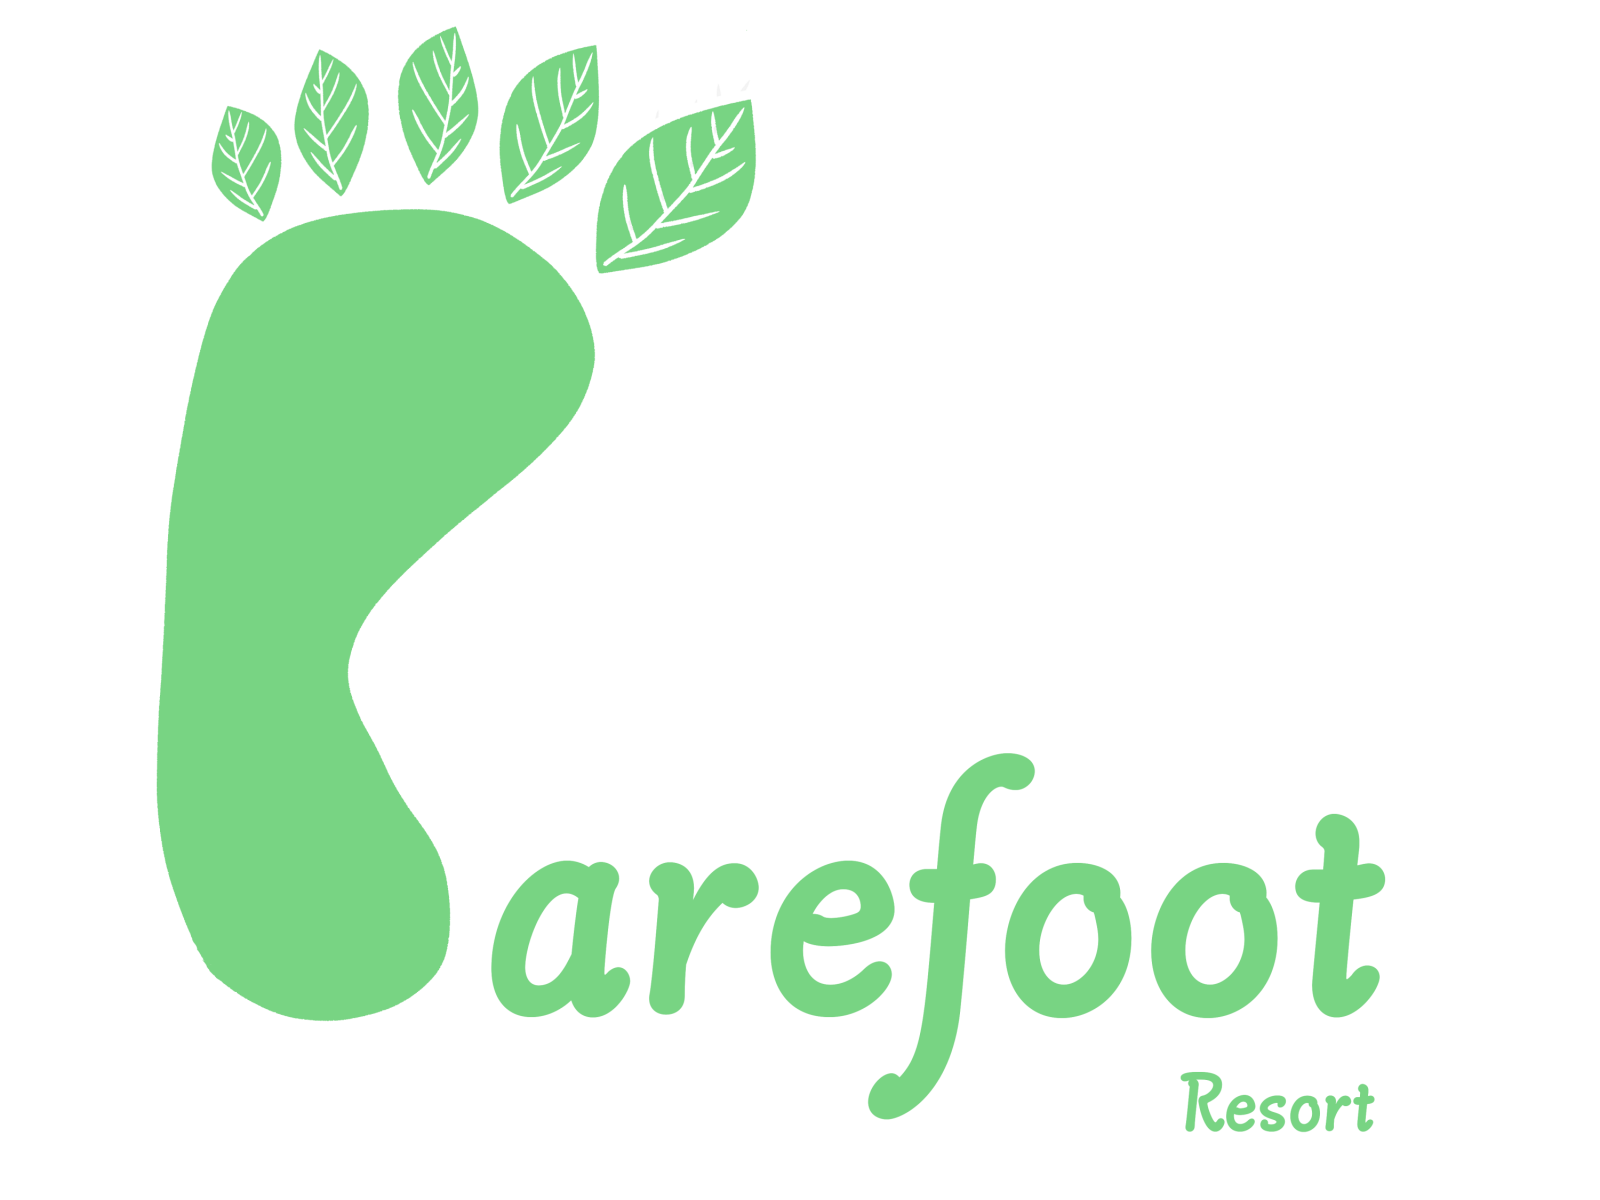 Barefoot Resort Logo by Progga Parmita Zaman on Dribbble